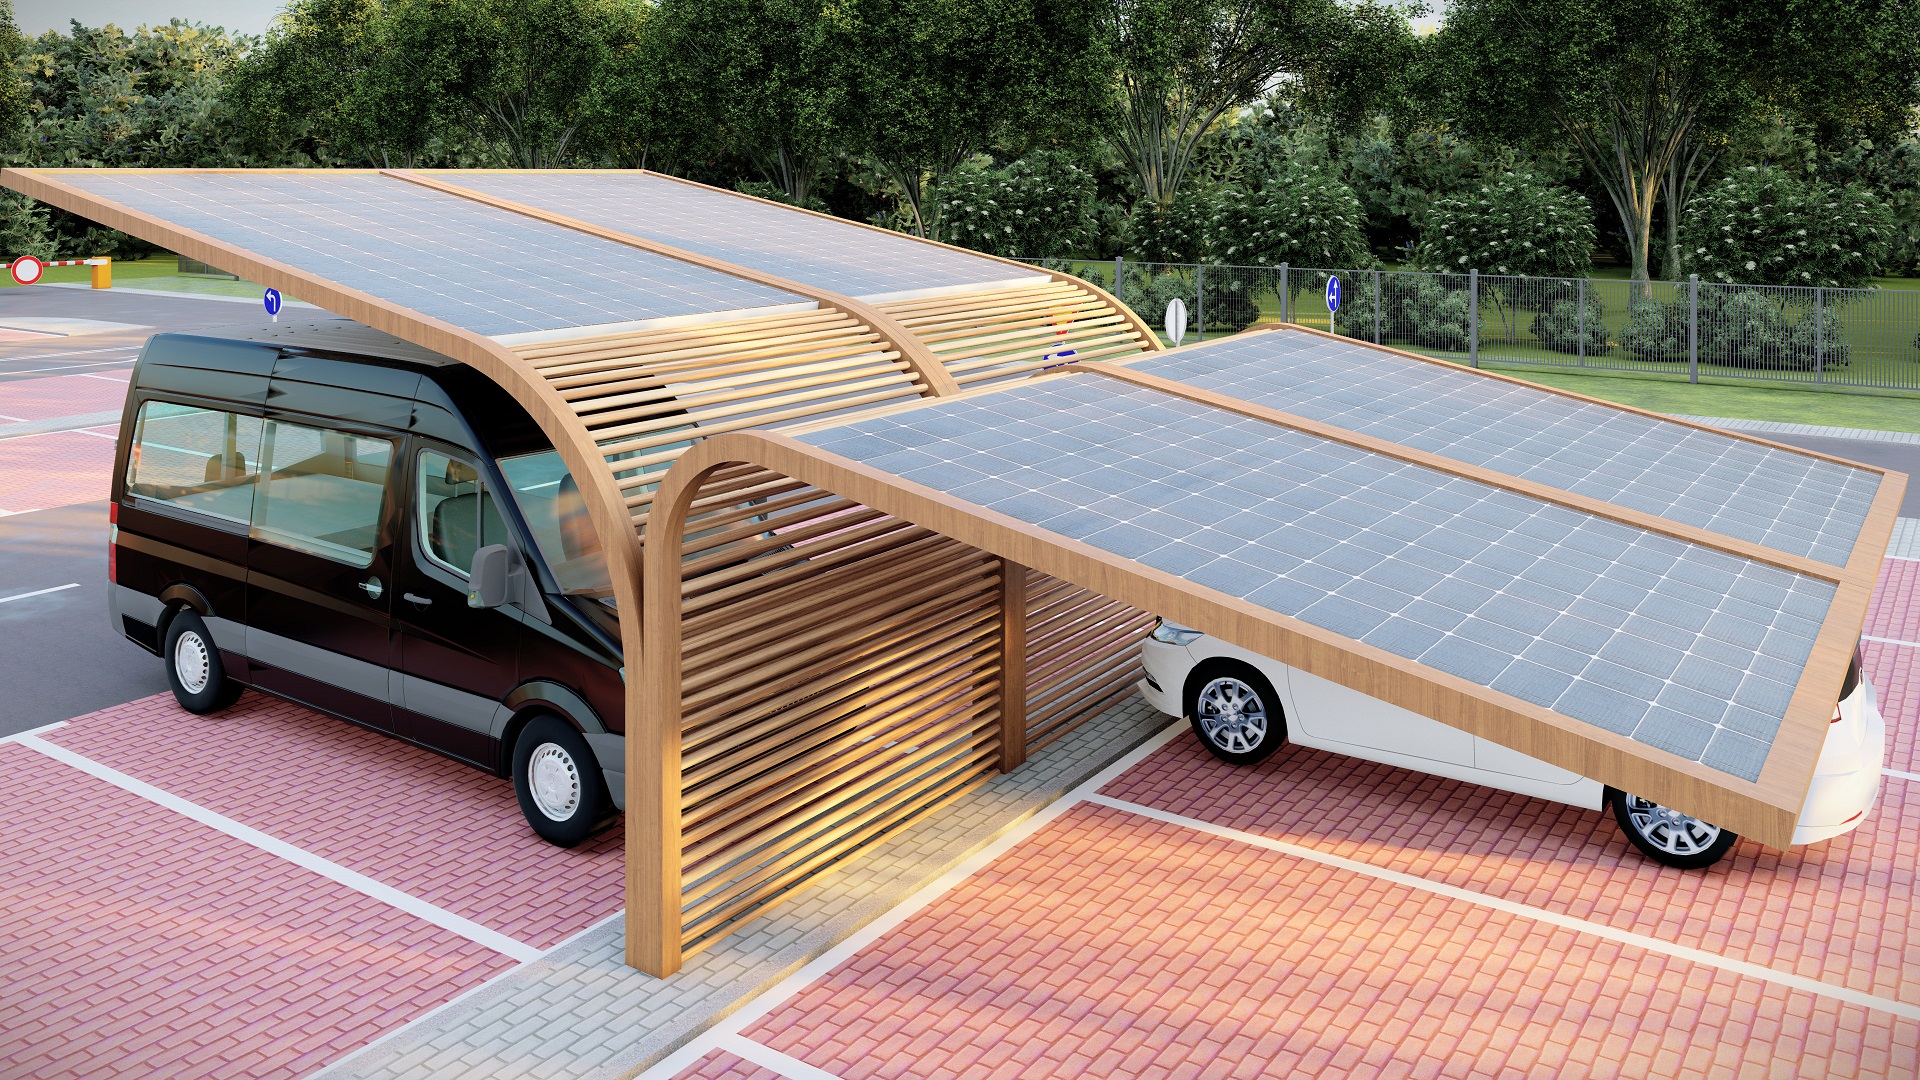 Car parks as small-scale solar power plants